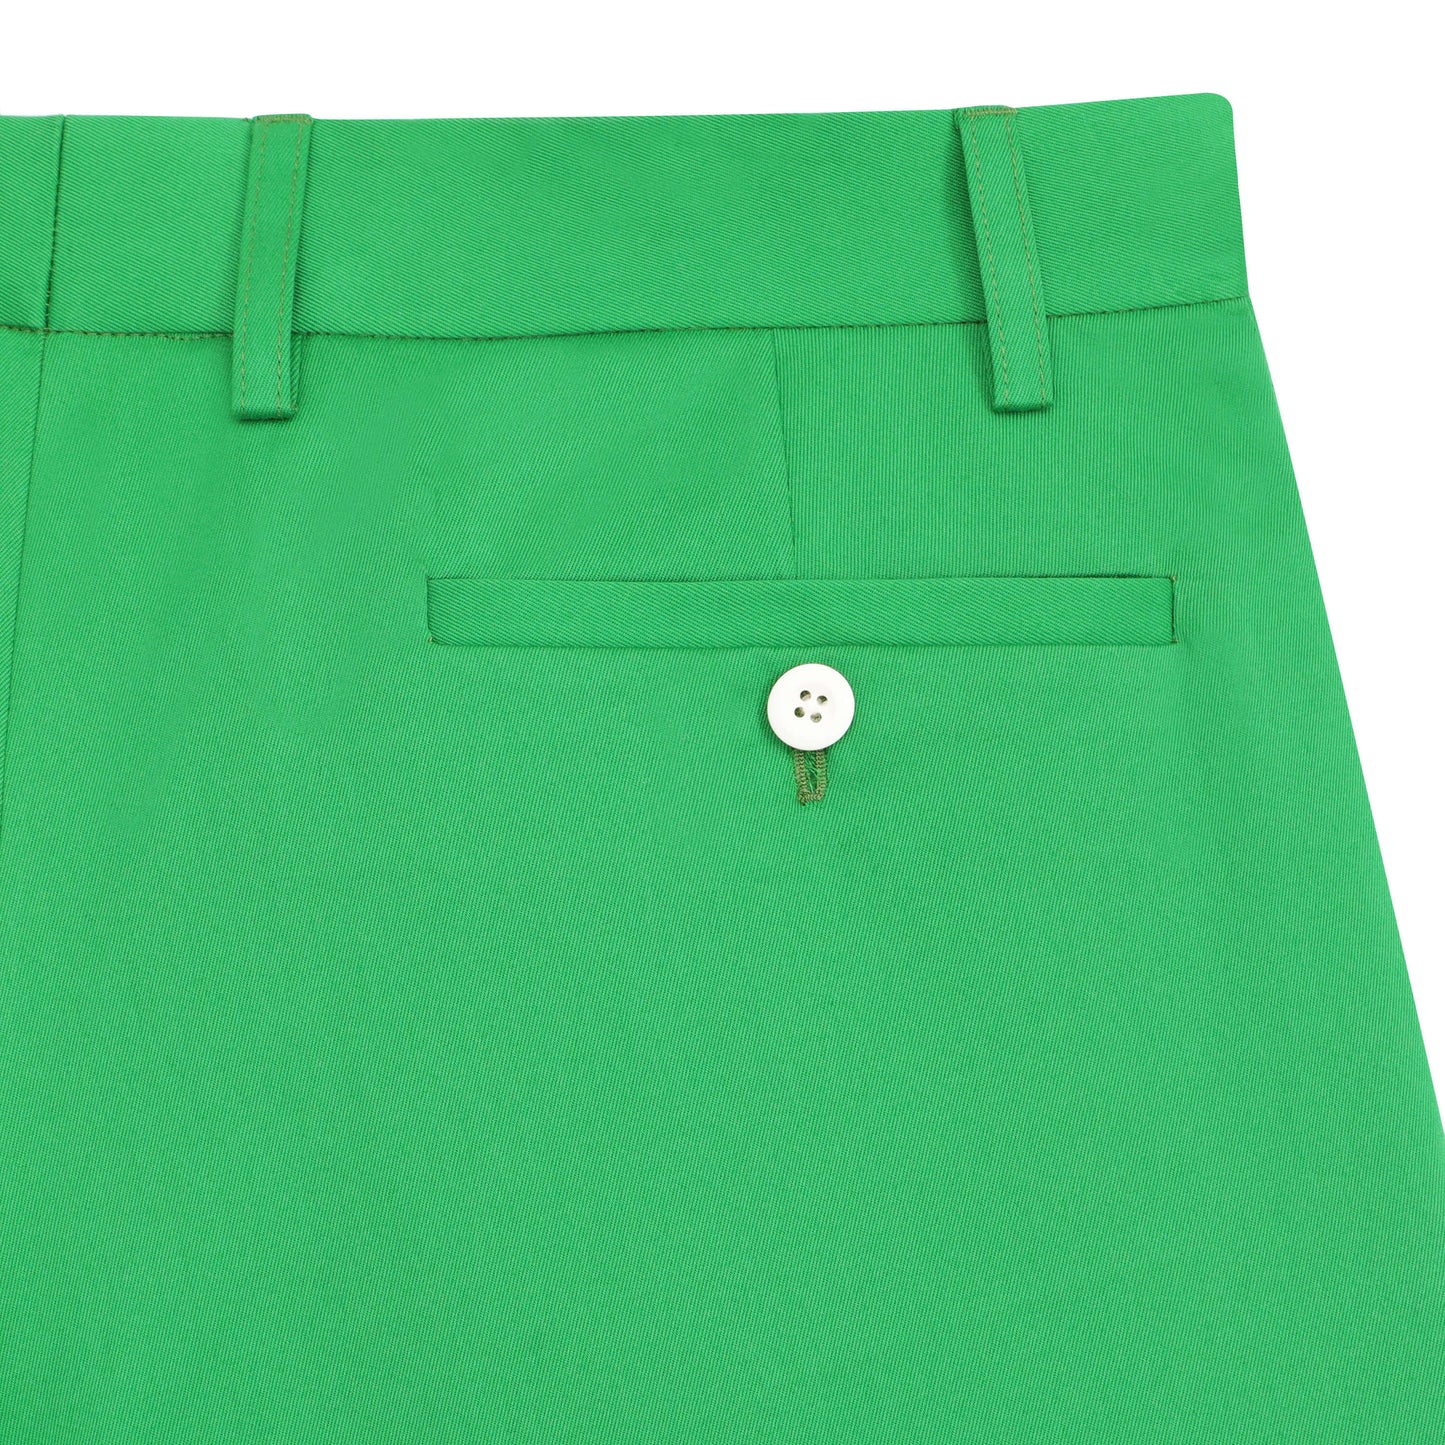 Green Babar Trousers